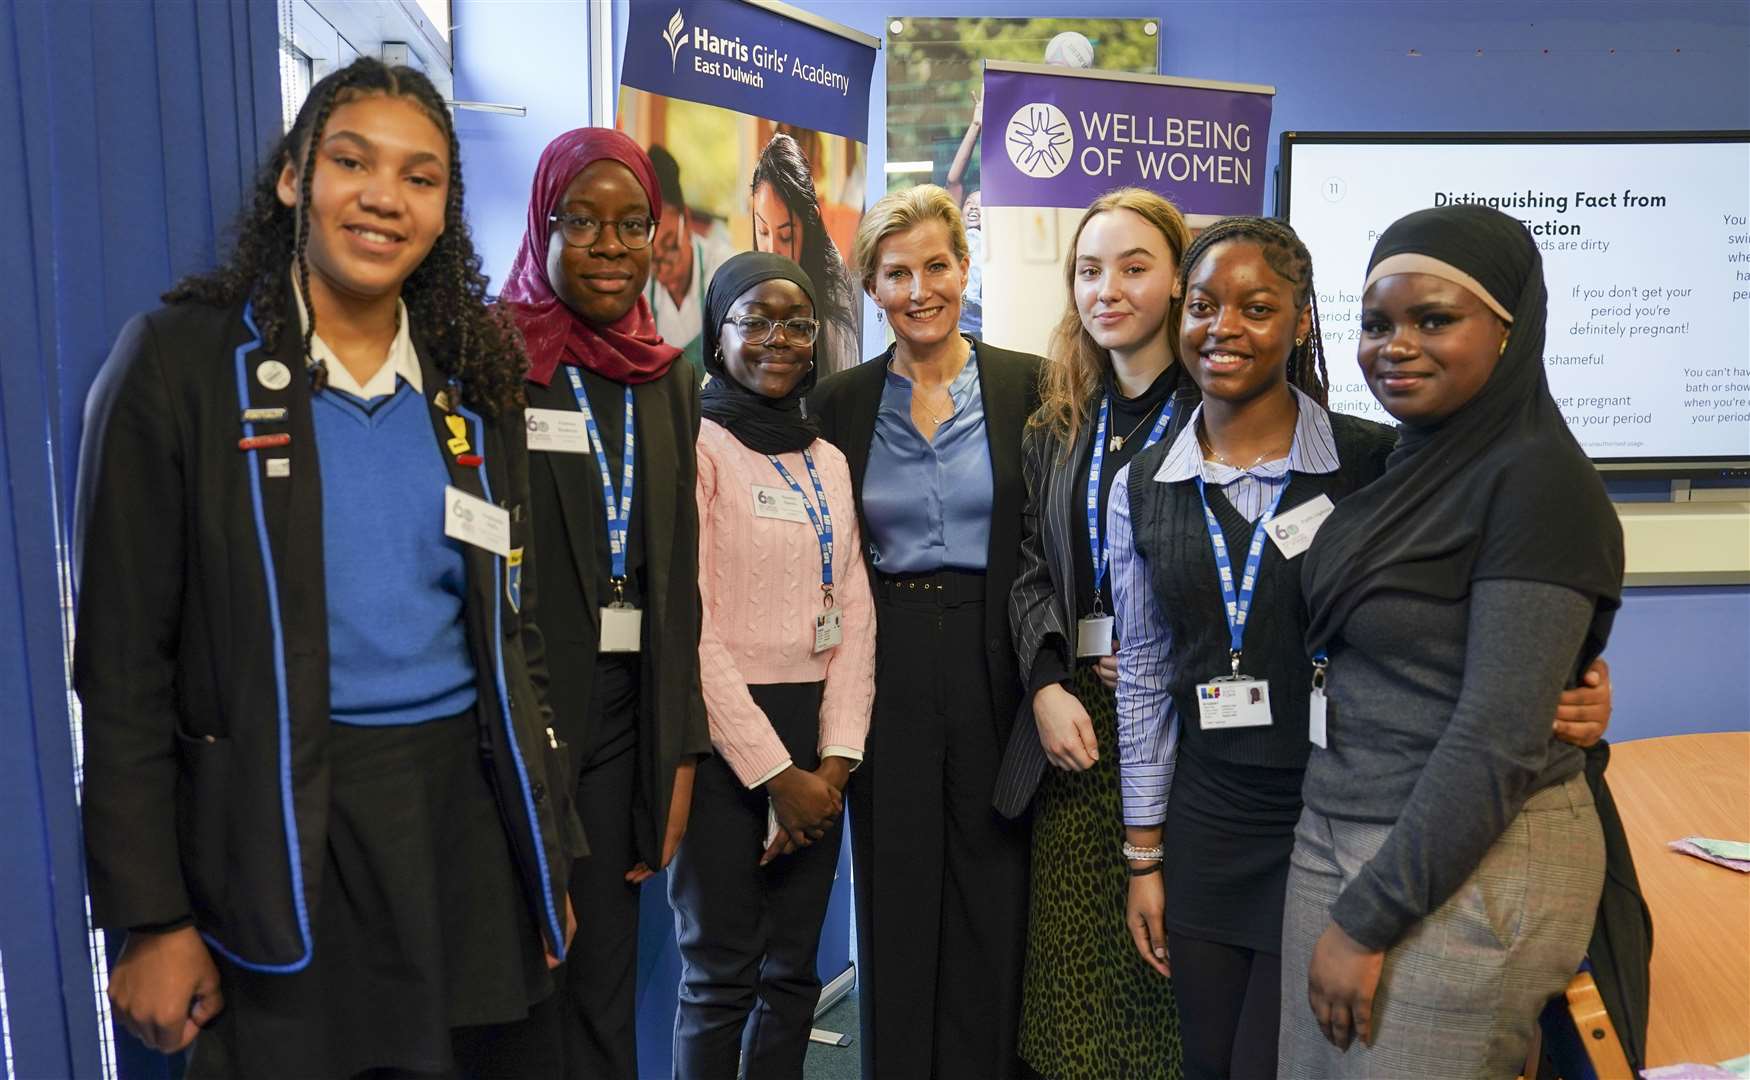 The Duchess of Edinburgh visited a menstrual health workshop at Harris Girls Academy in East Dulwich (Arthur Edwards/PA)